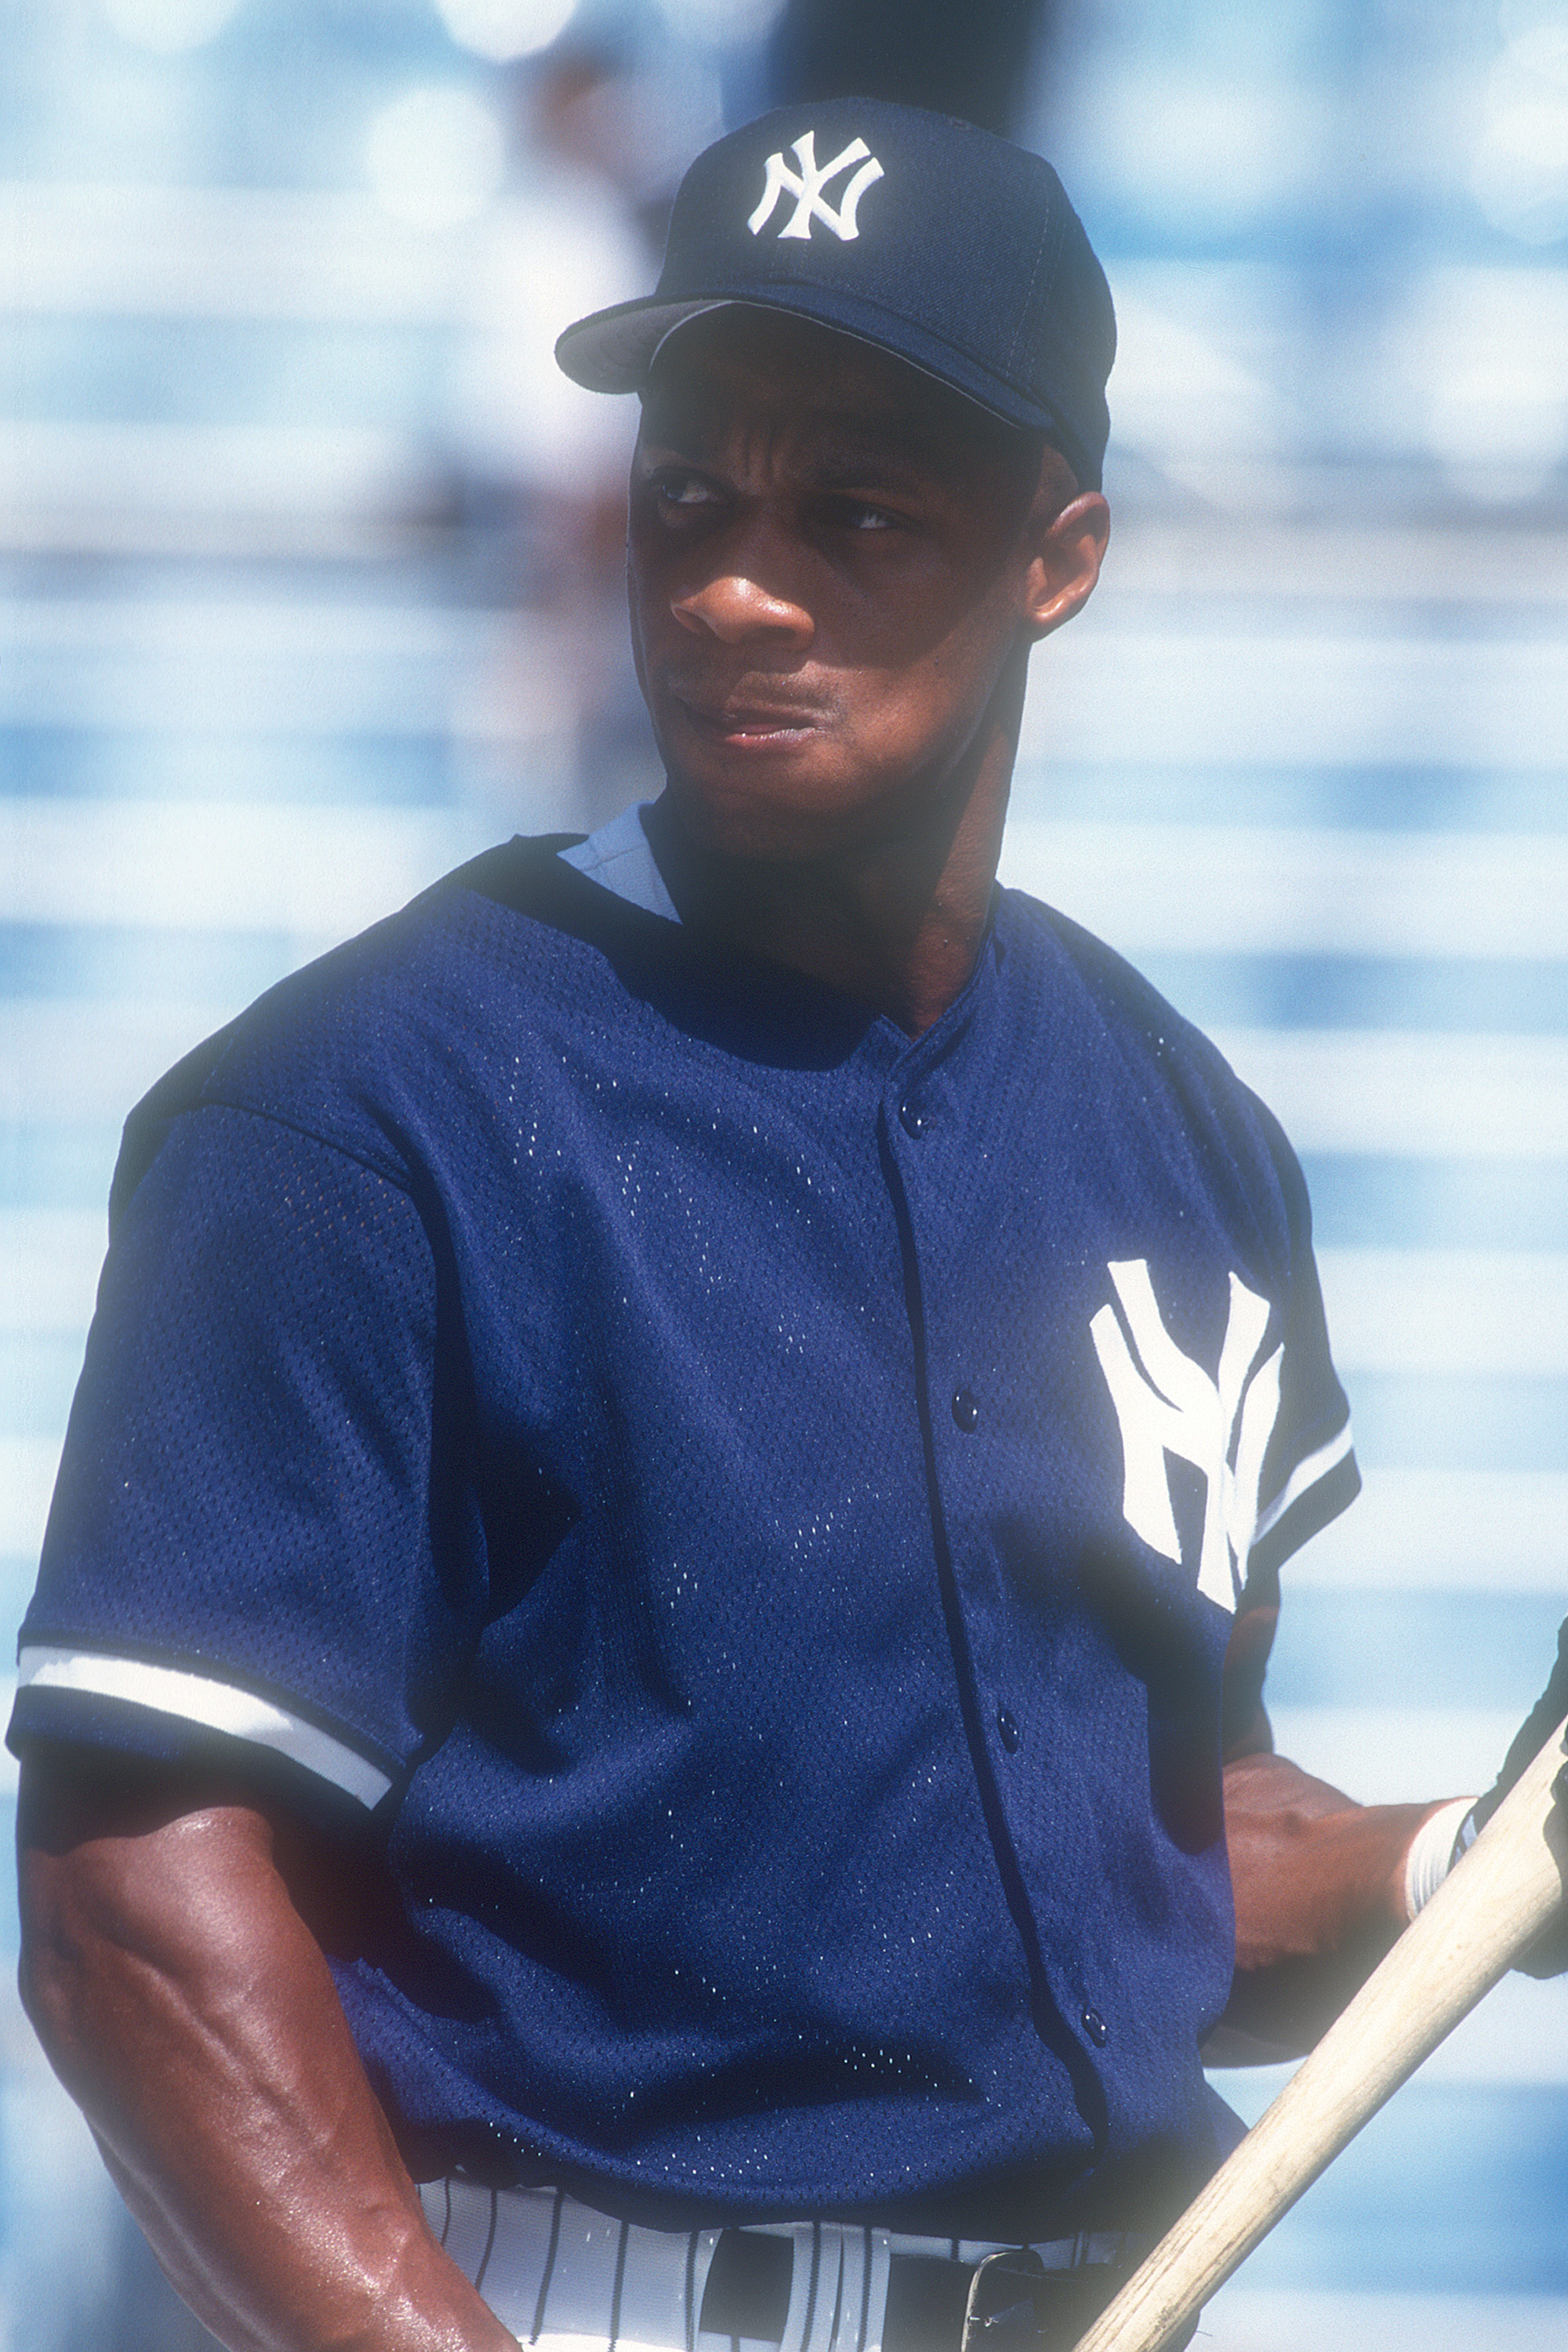 Darryl Strawberry in a New York Yankees uniform in 1995